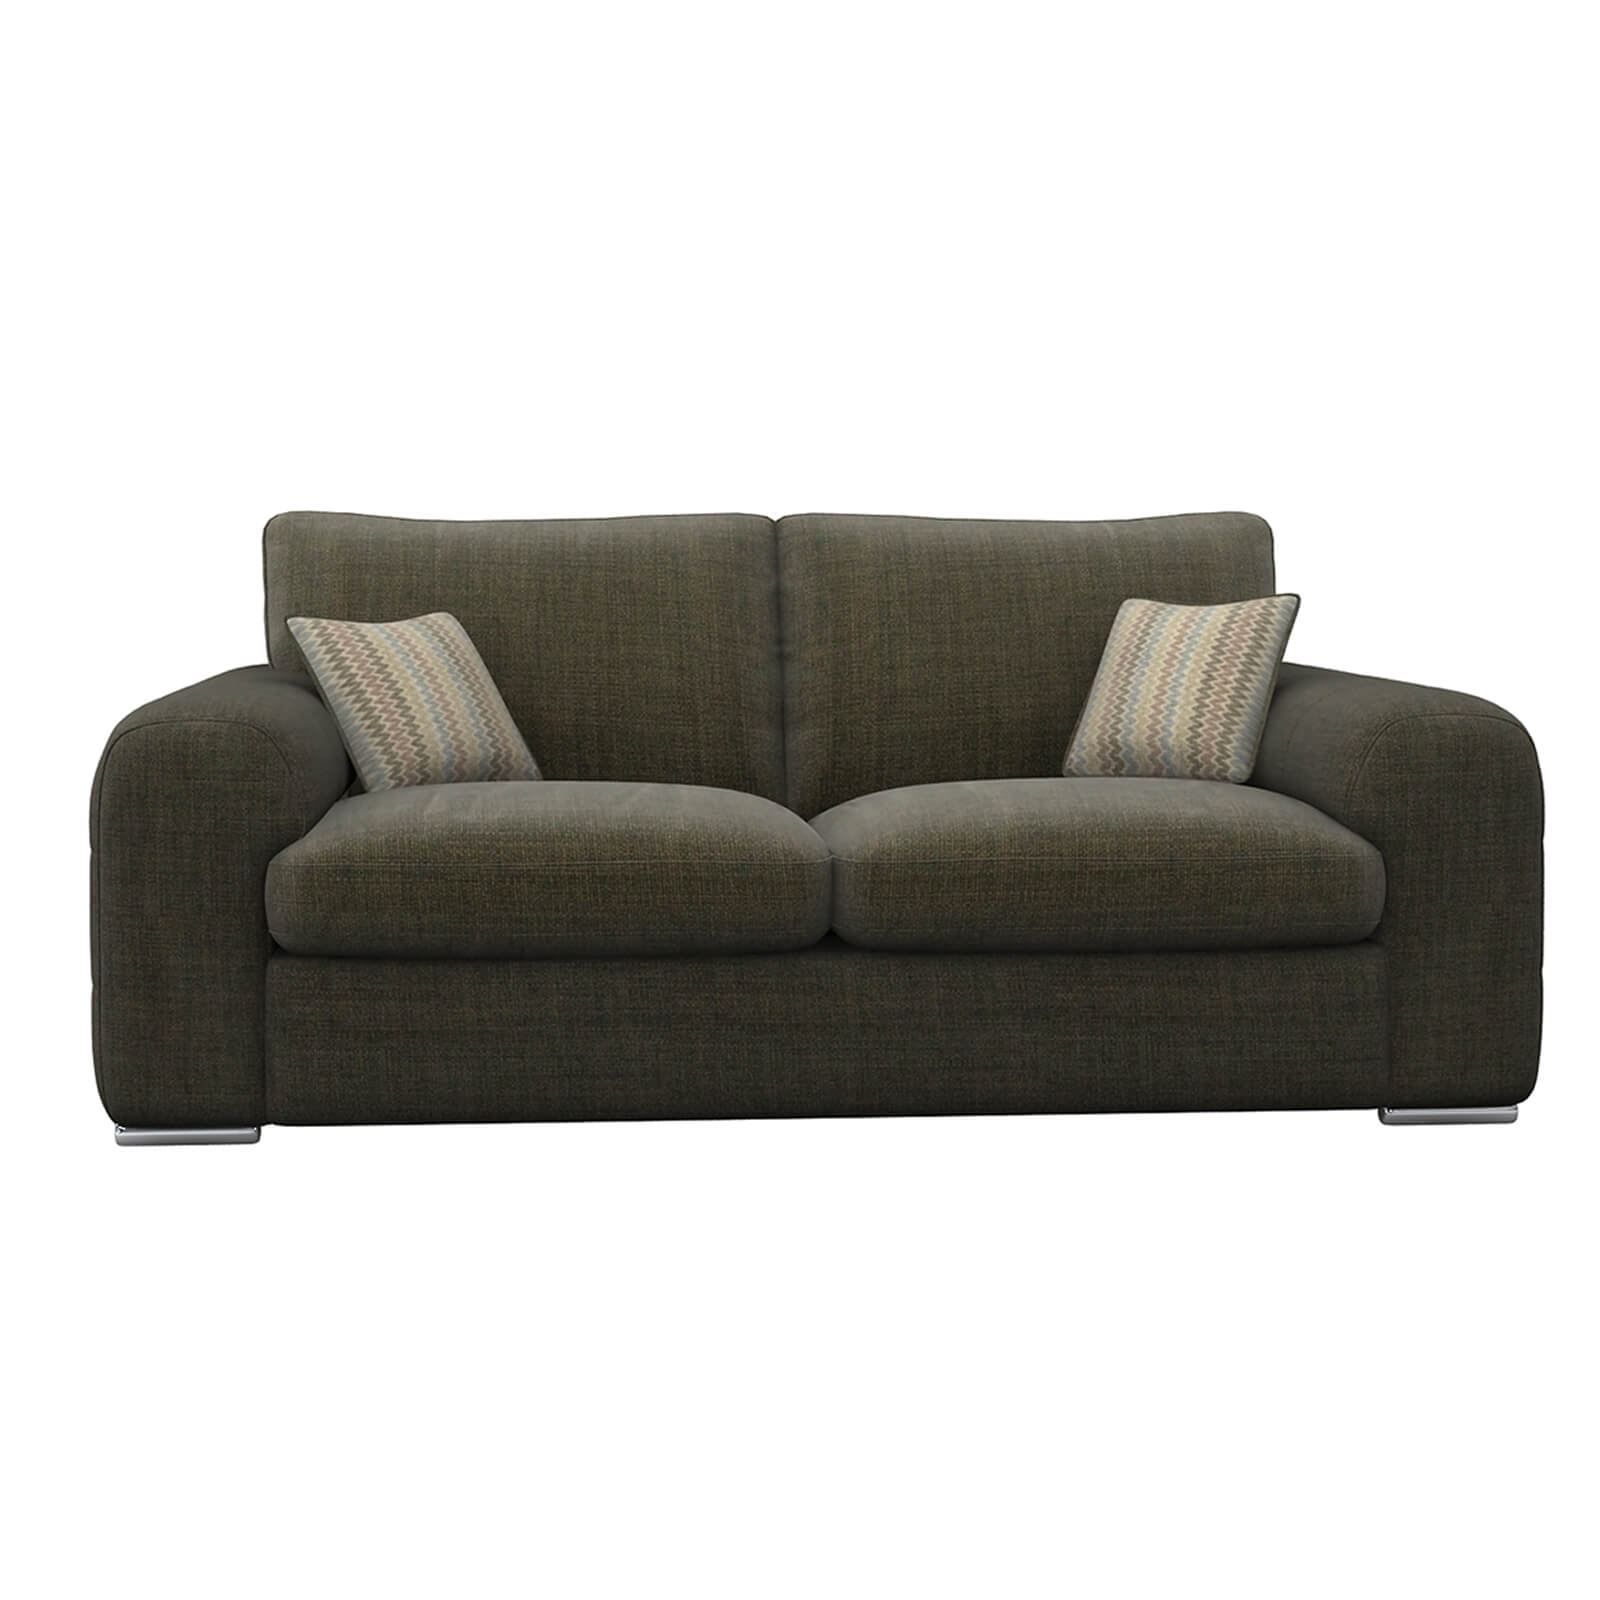 Amethyst 3 Seater Sofa - Brown